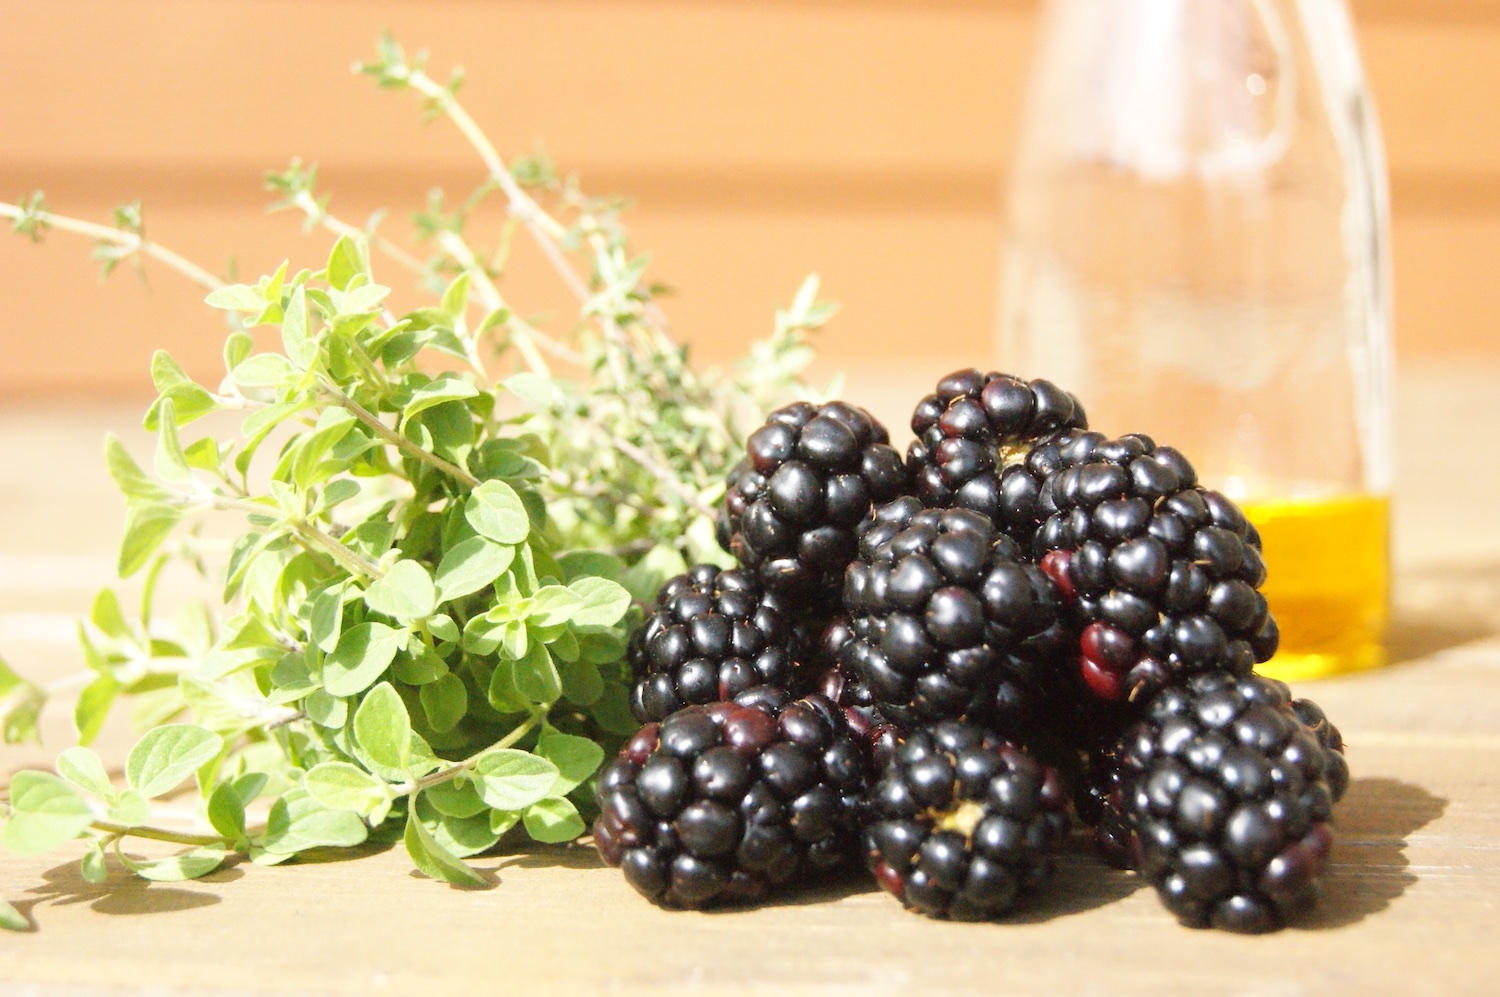 Blackberries and fresh herbs dressing